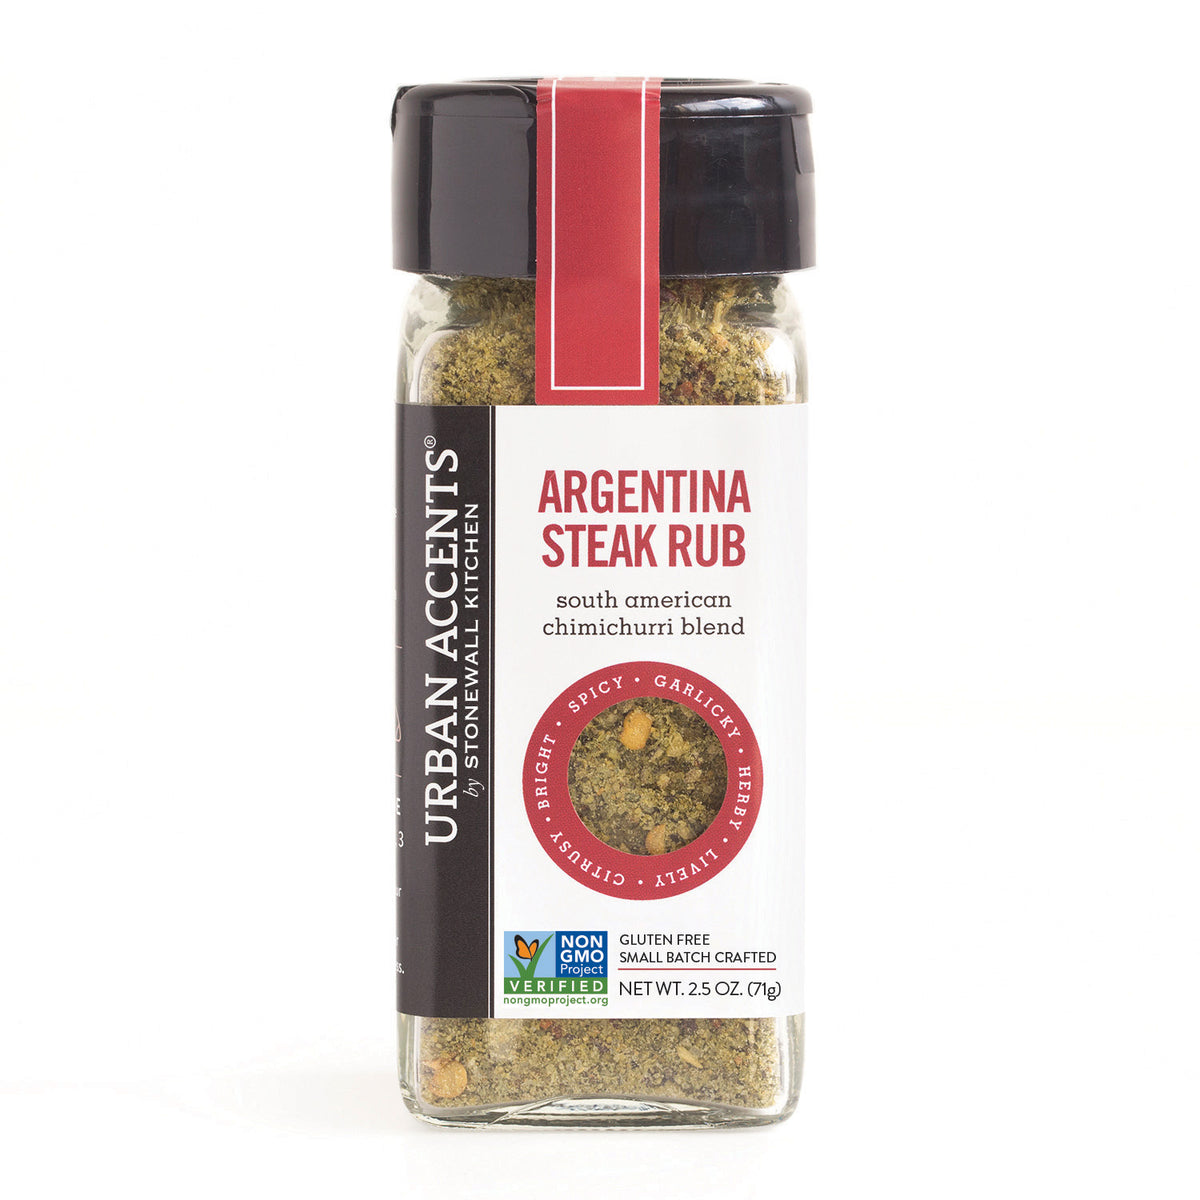 Argentina Steak Rub